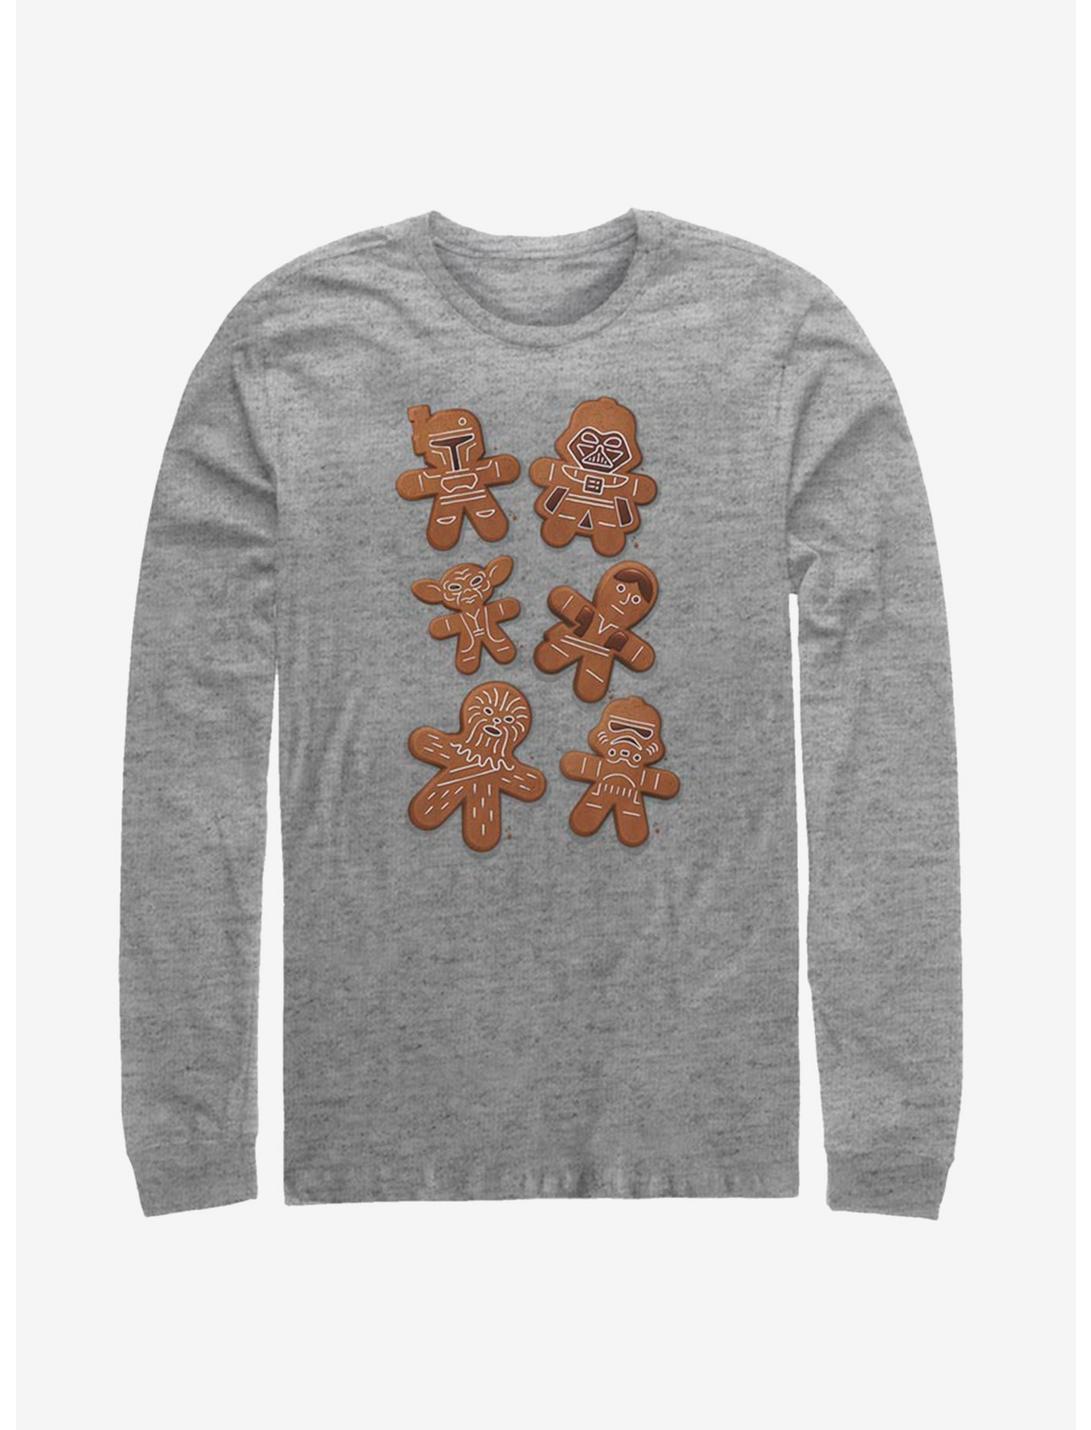 Star Wars Gingerbread Wars Long-Sleeve T-Shirt, ATH HTR, hi-res